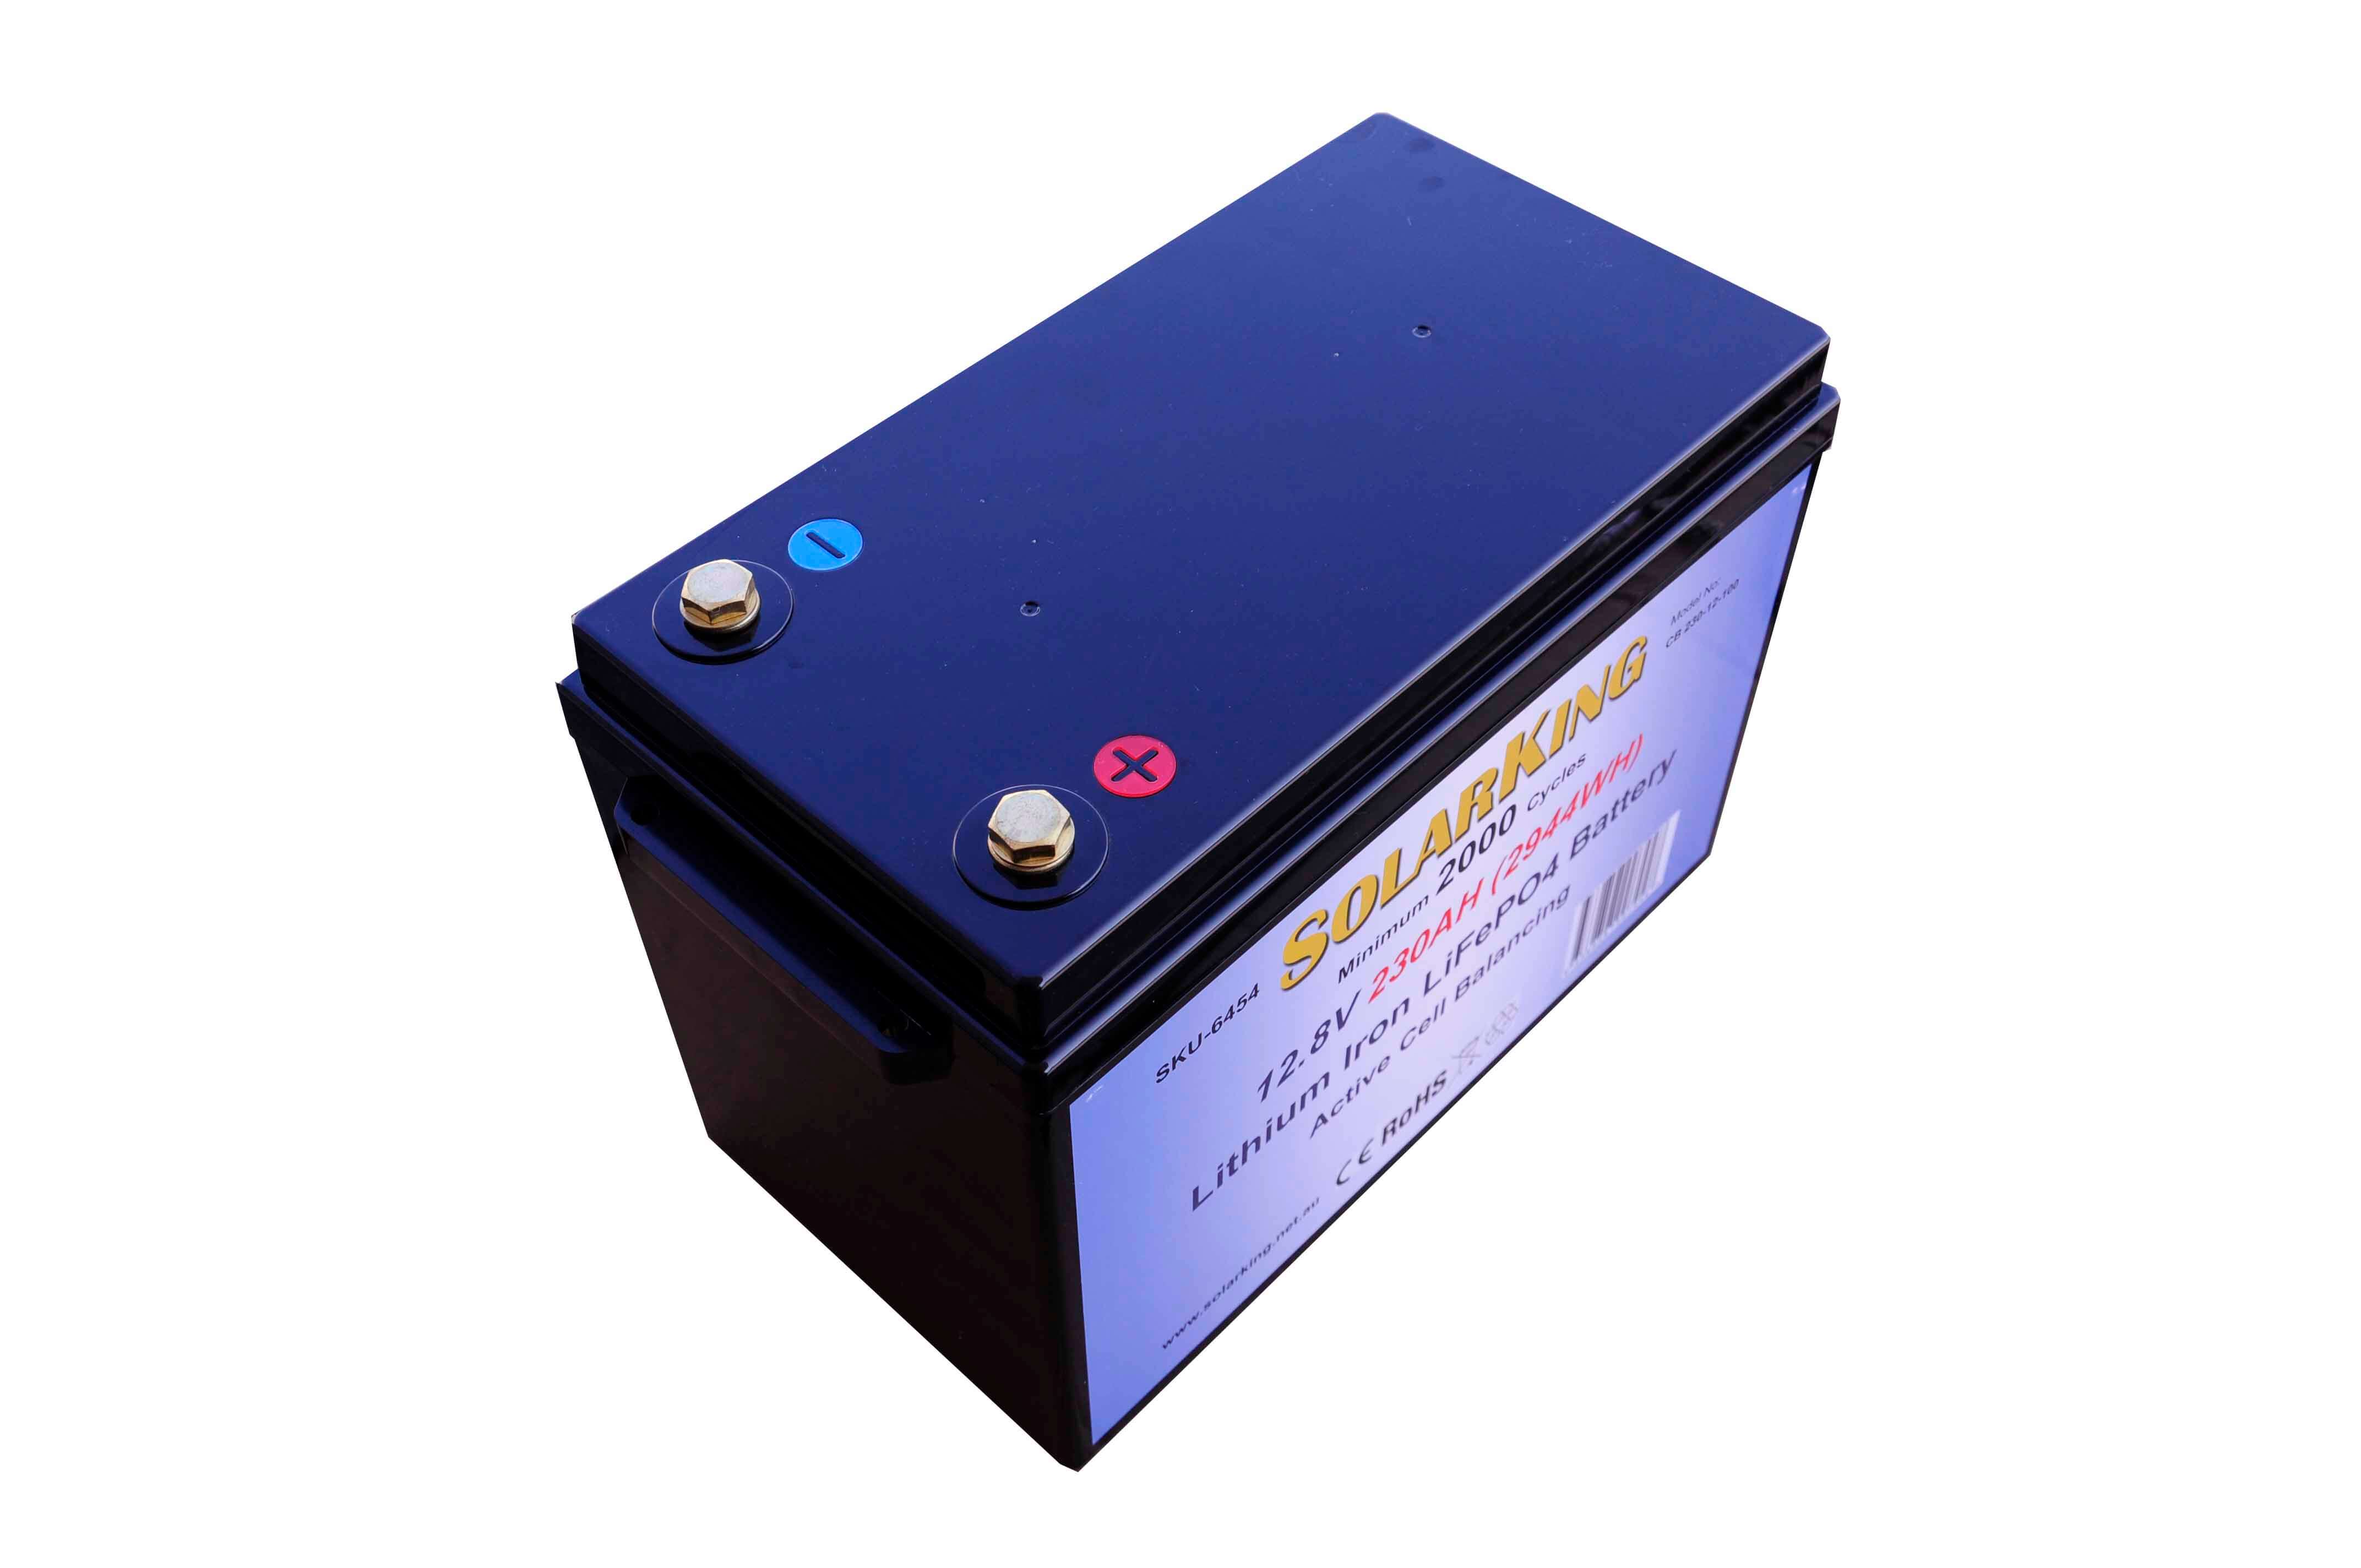 230AH Lithium Iron Solar Battery CB-230-12-100